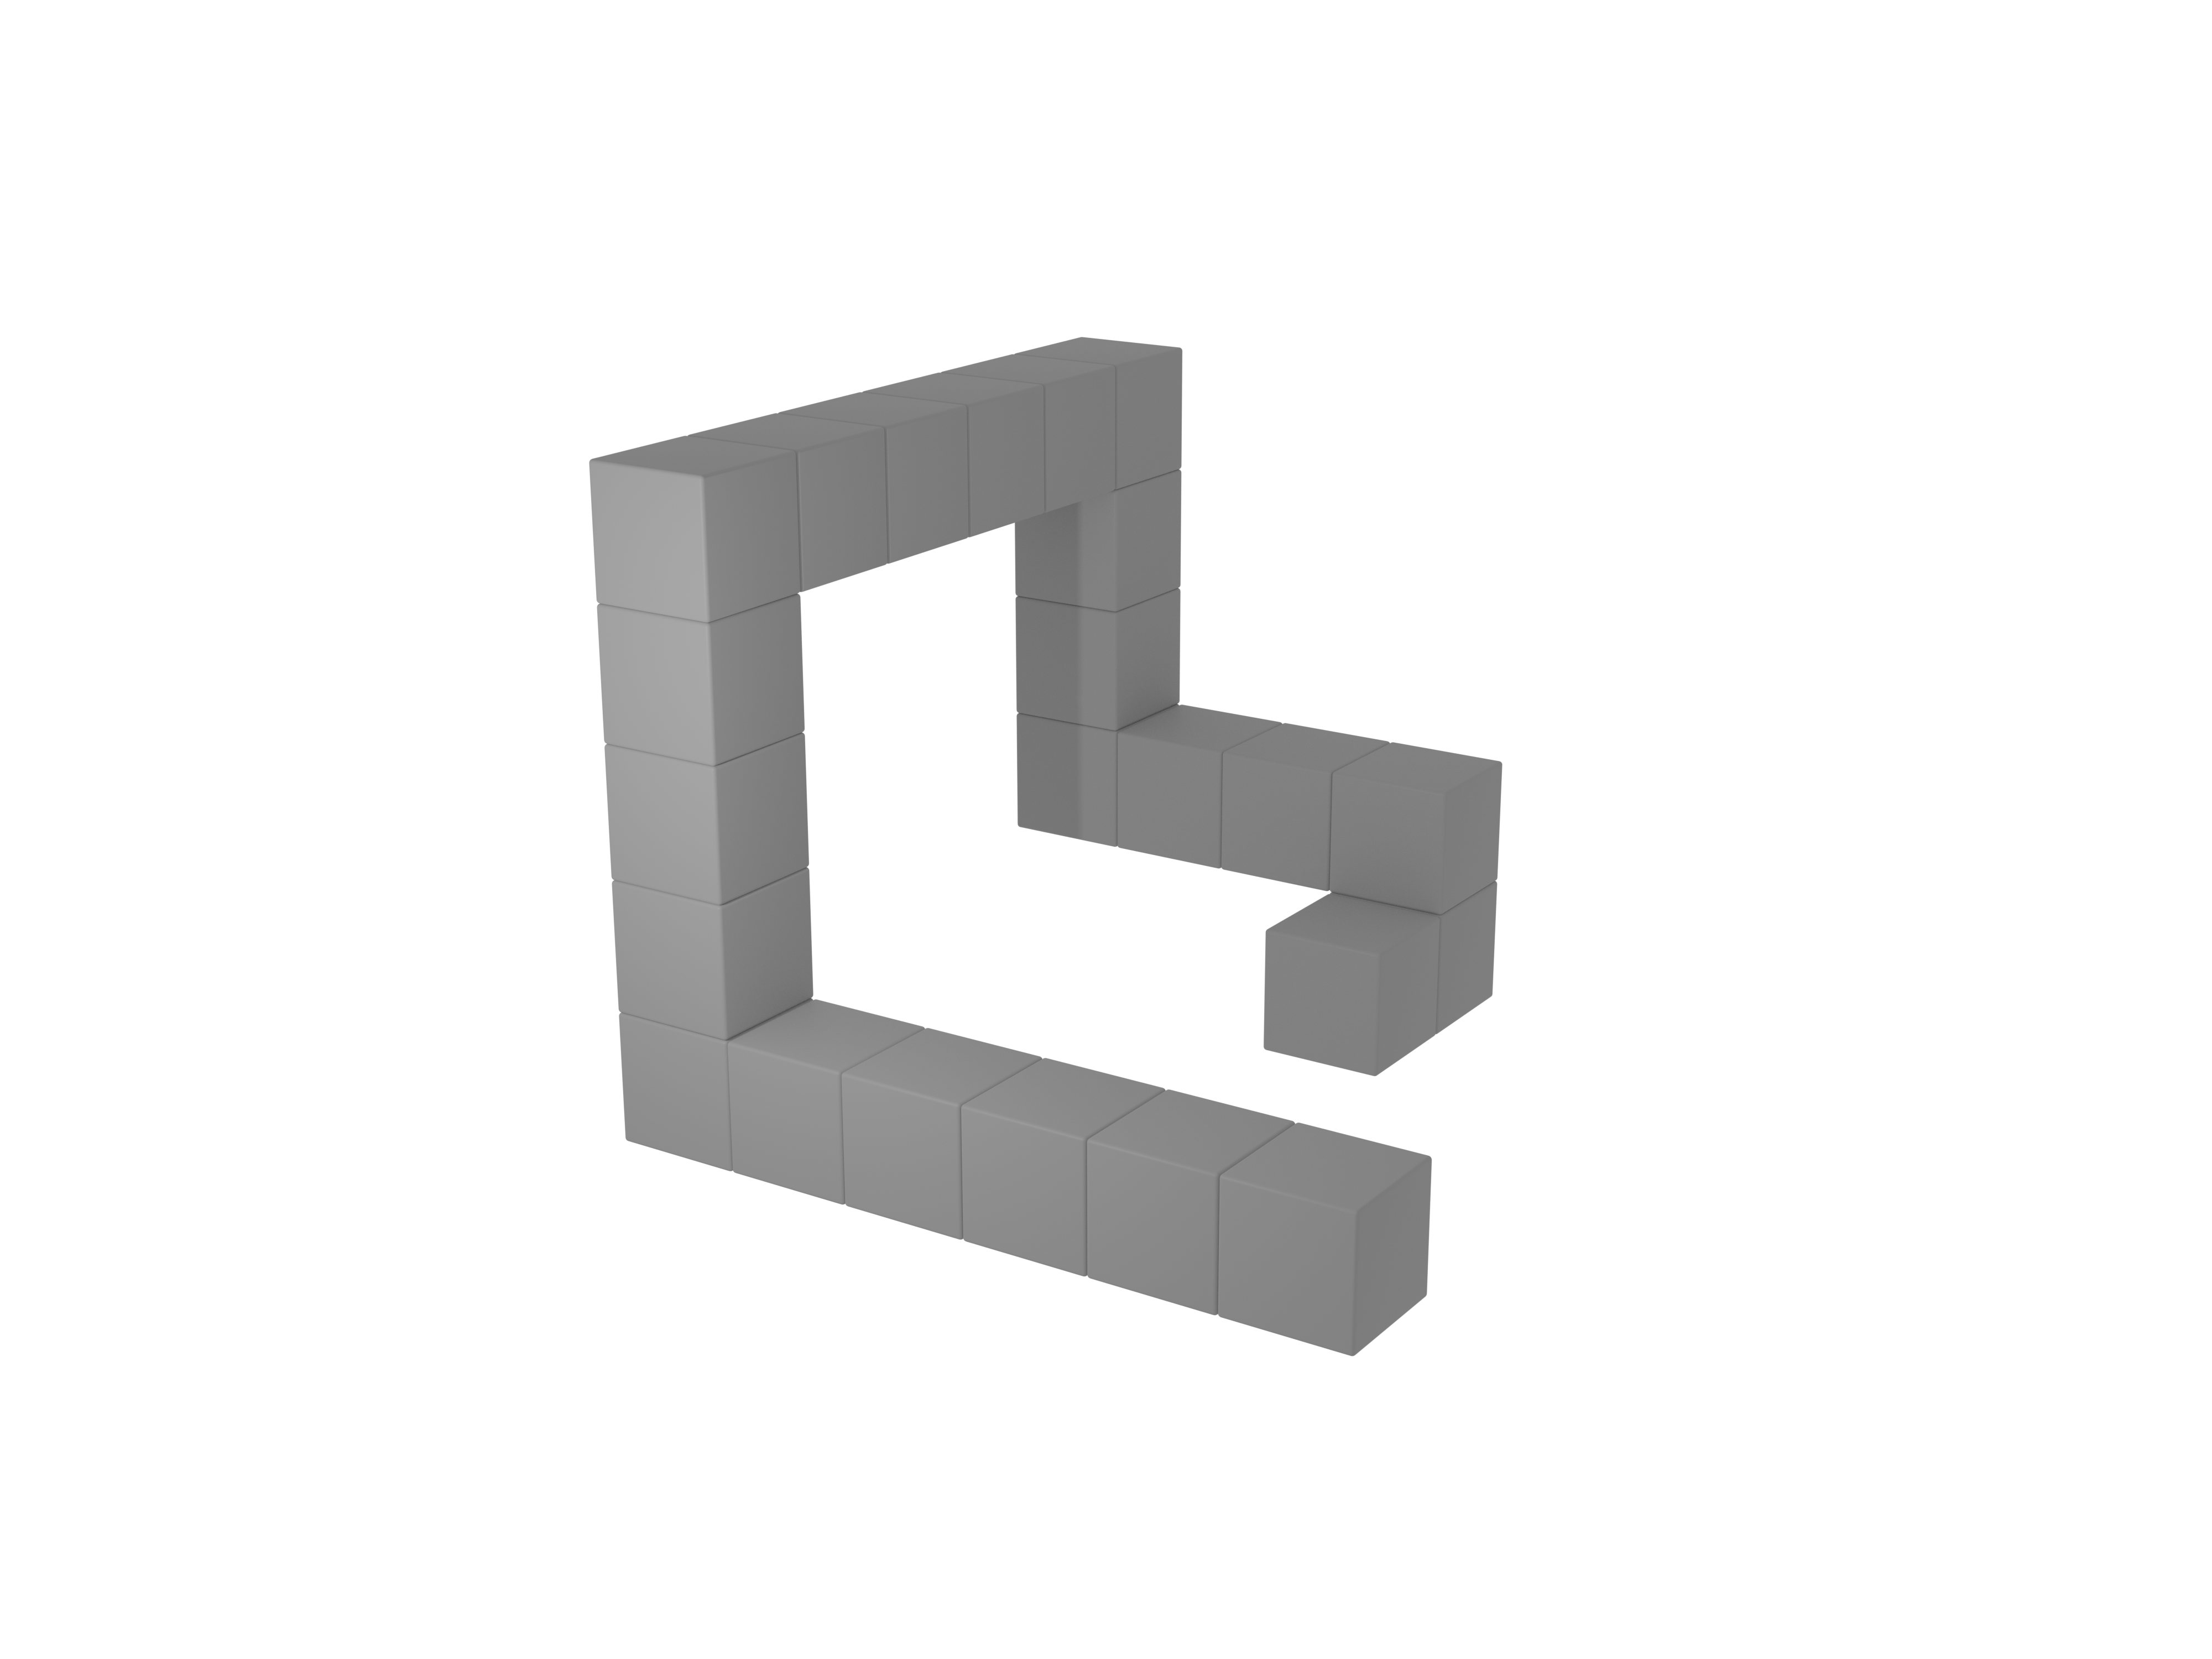 23 cubes in 3D